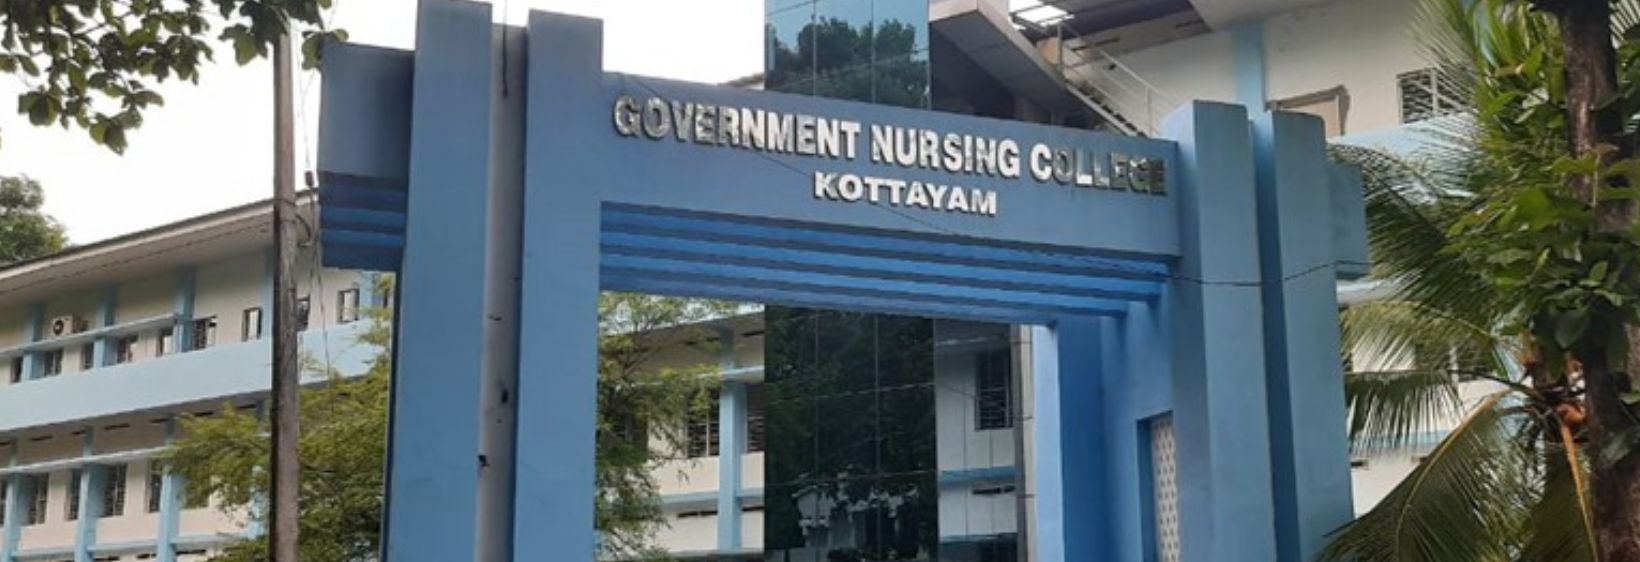 Govt College of Nursing - Kottayam